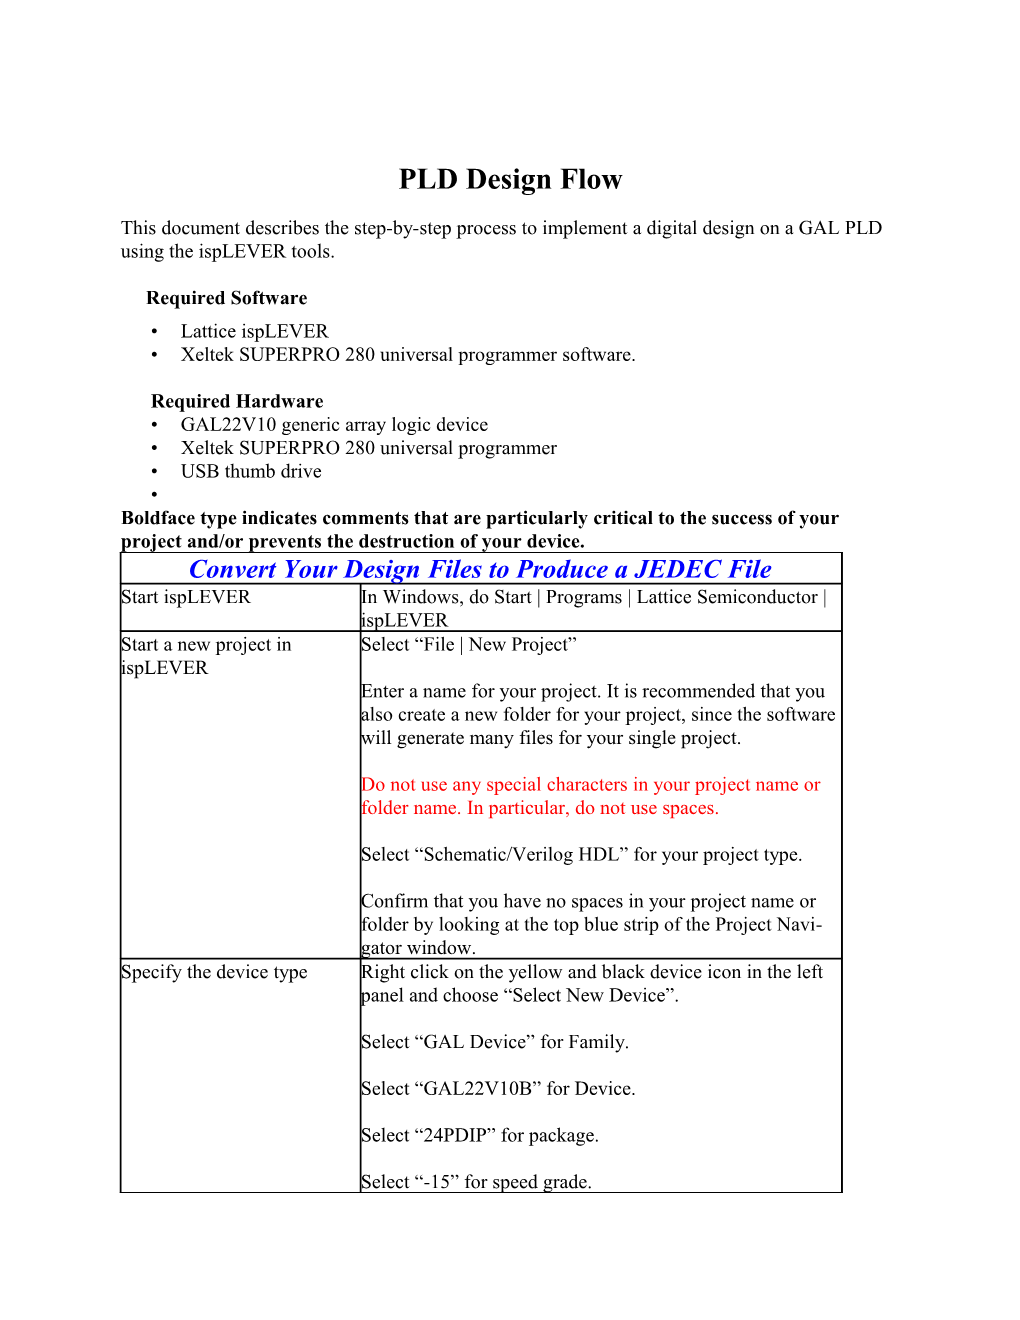 PLD Design Flow: GAL, Verilog